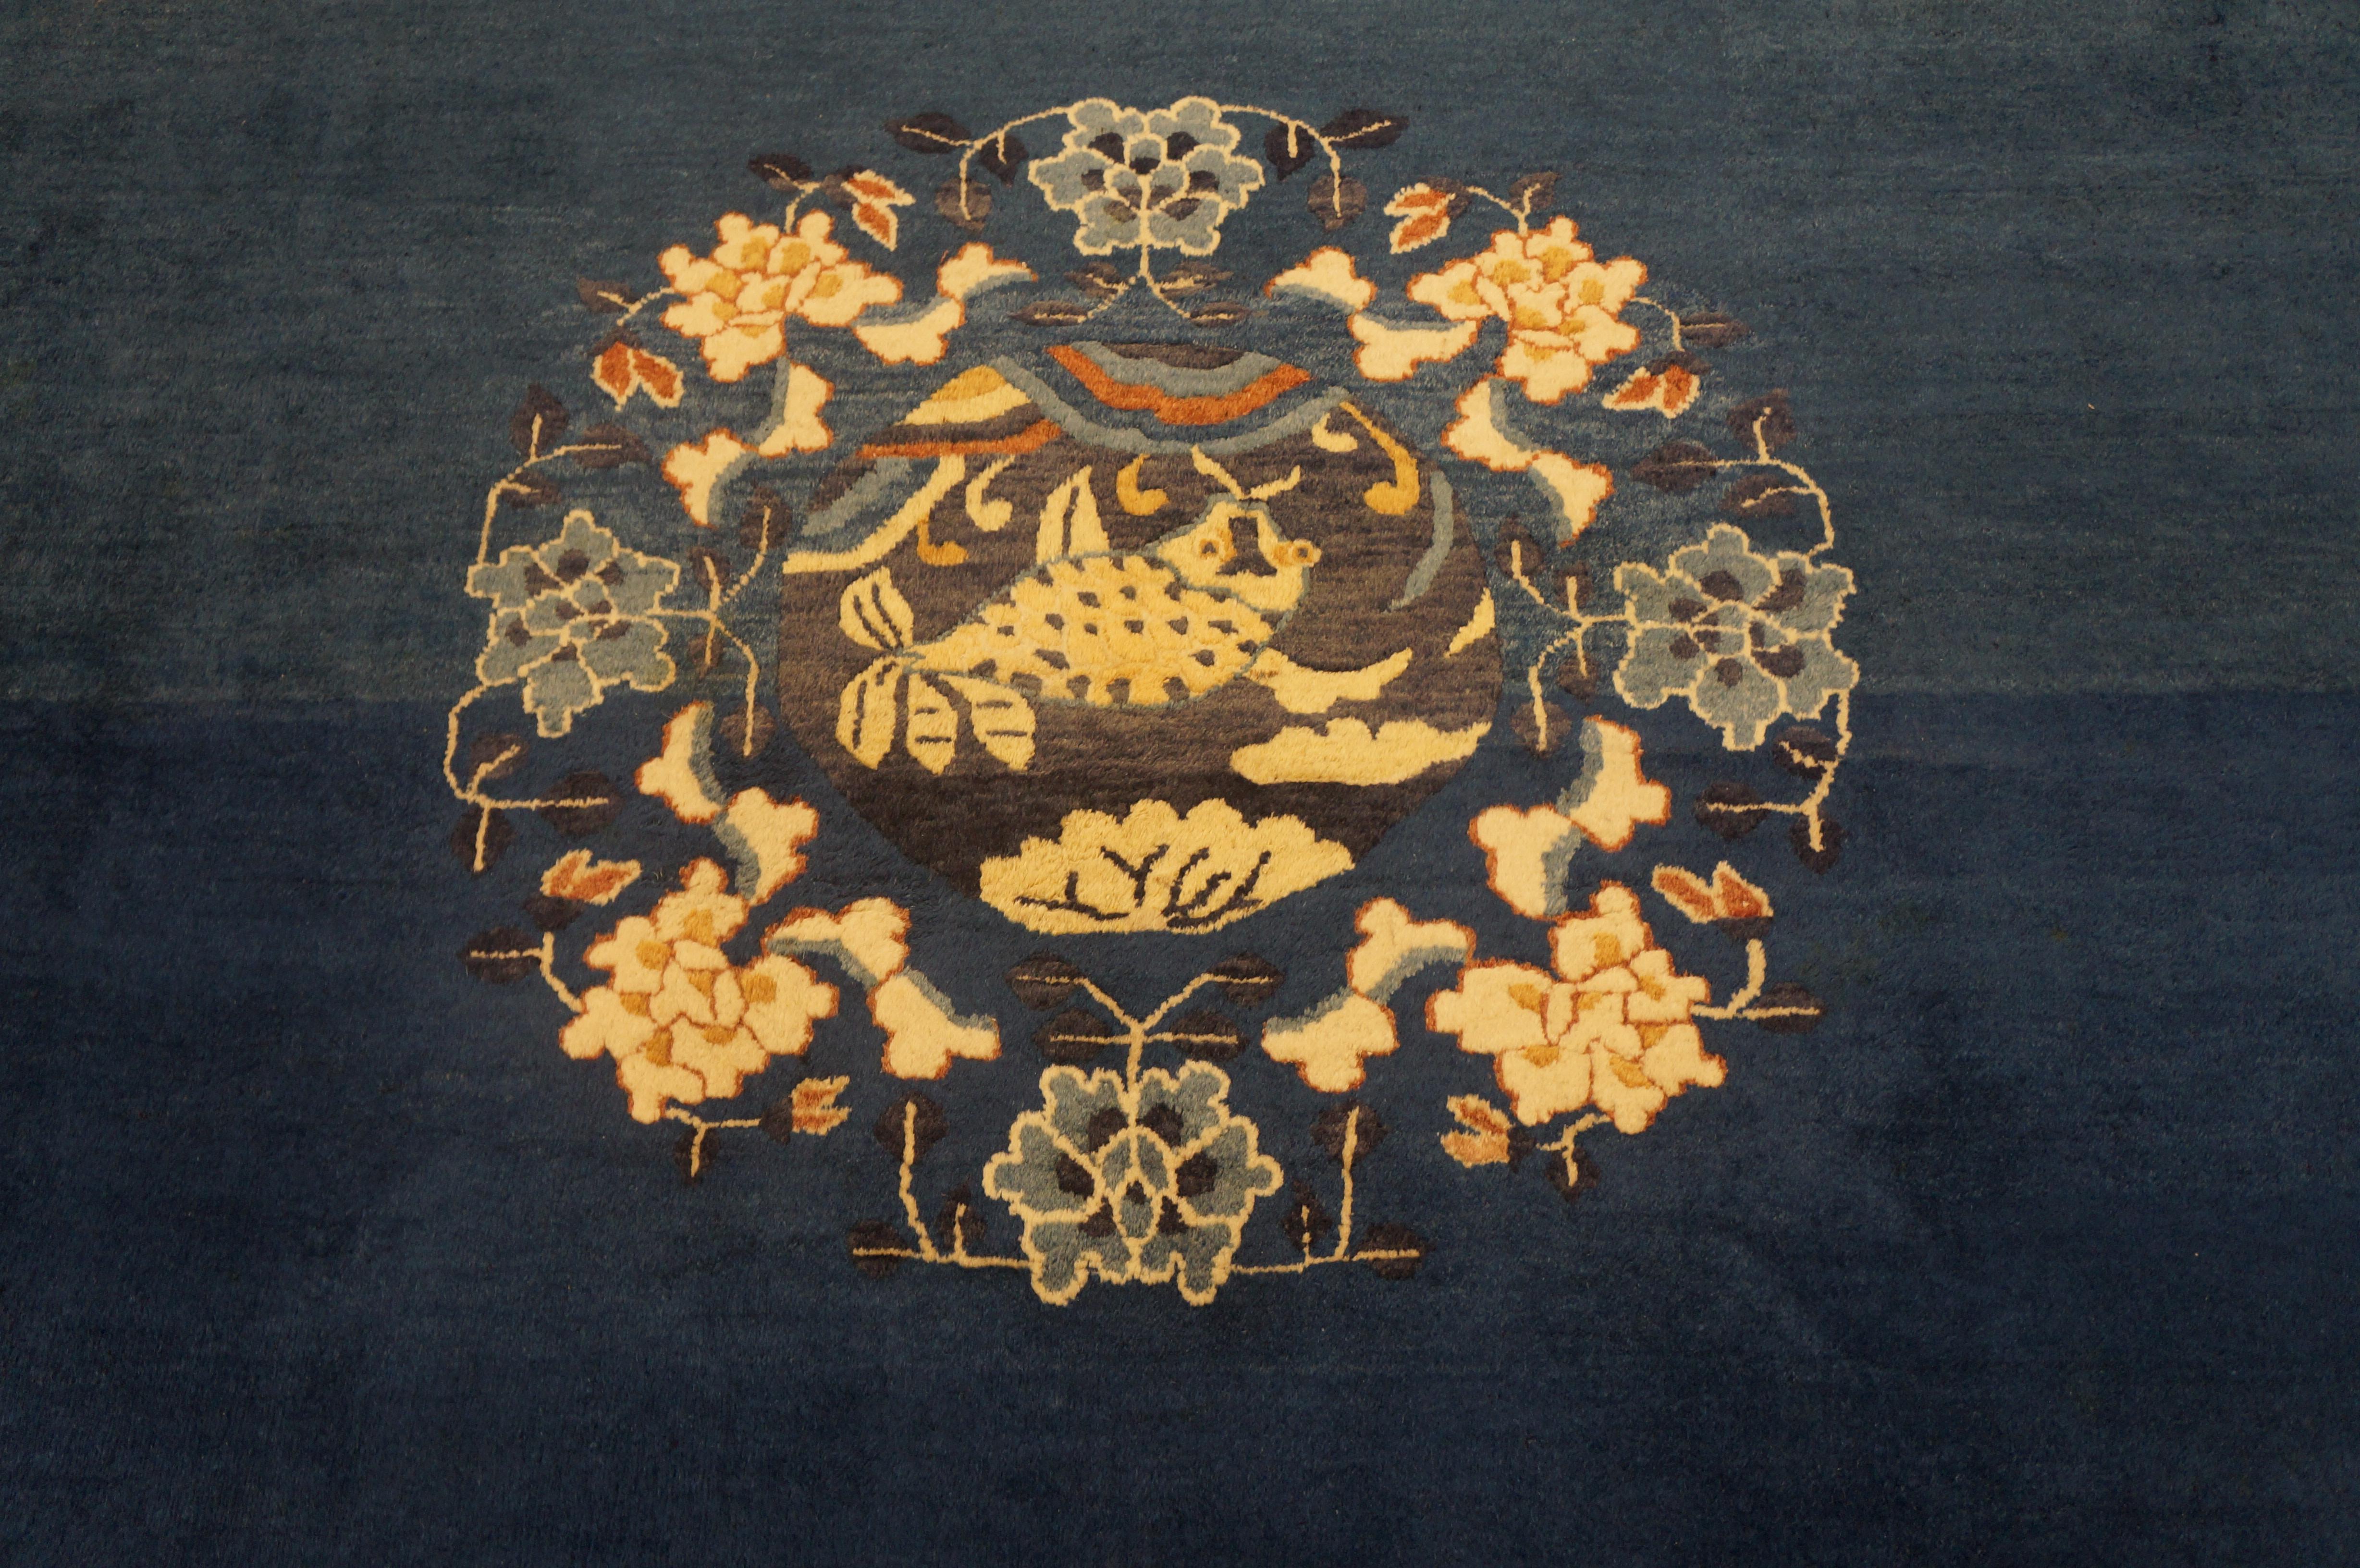 Early 20th Century Chinese Peking Carpet ( 11'9